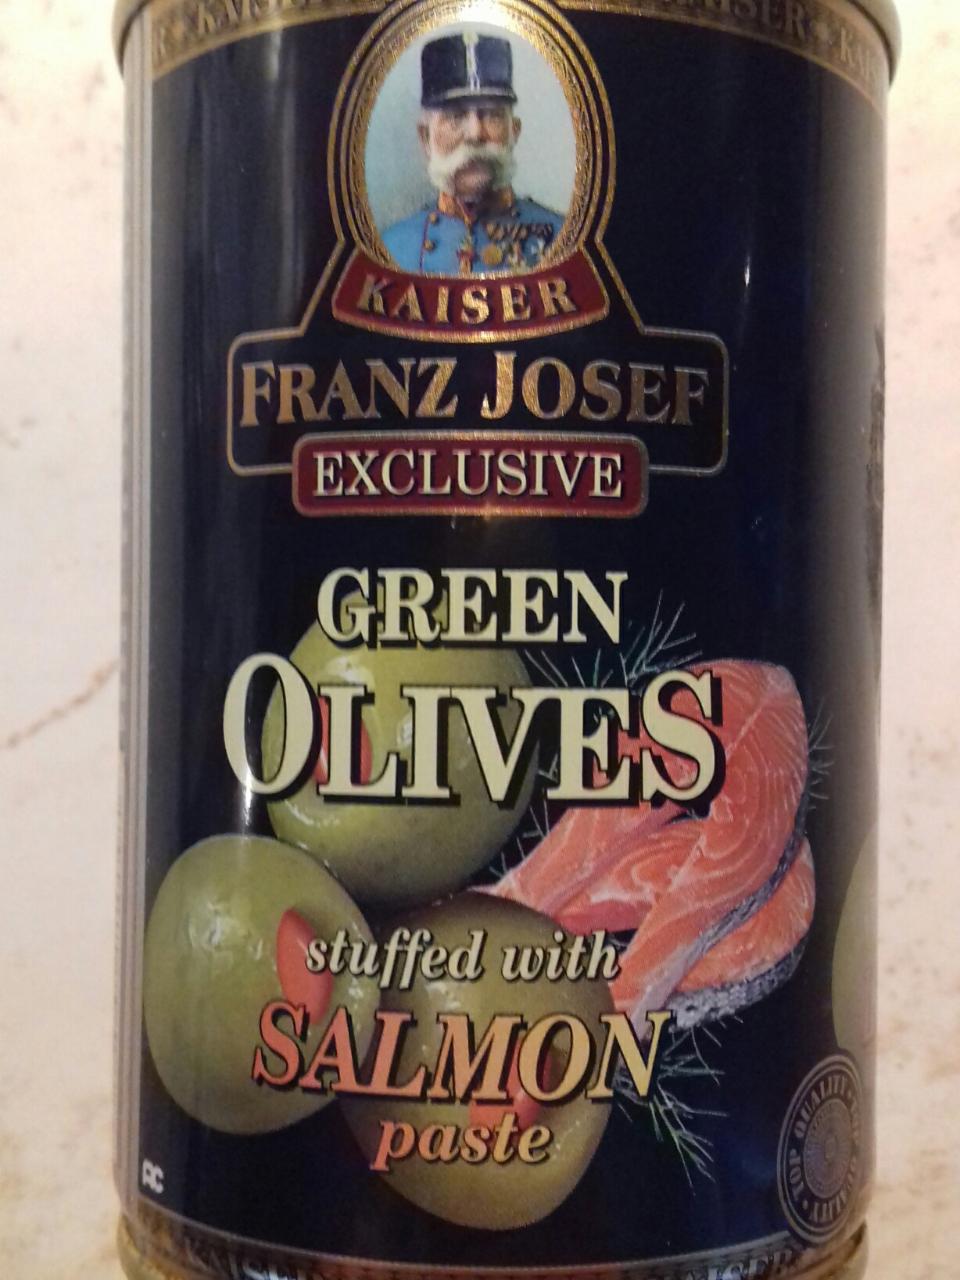 Fotografie - Zelené olivy plněné lososovou pastou Kaiser Franz Josef exclusive